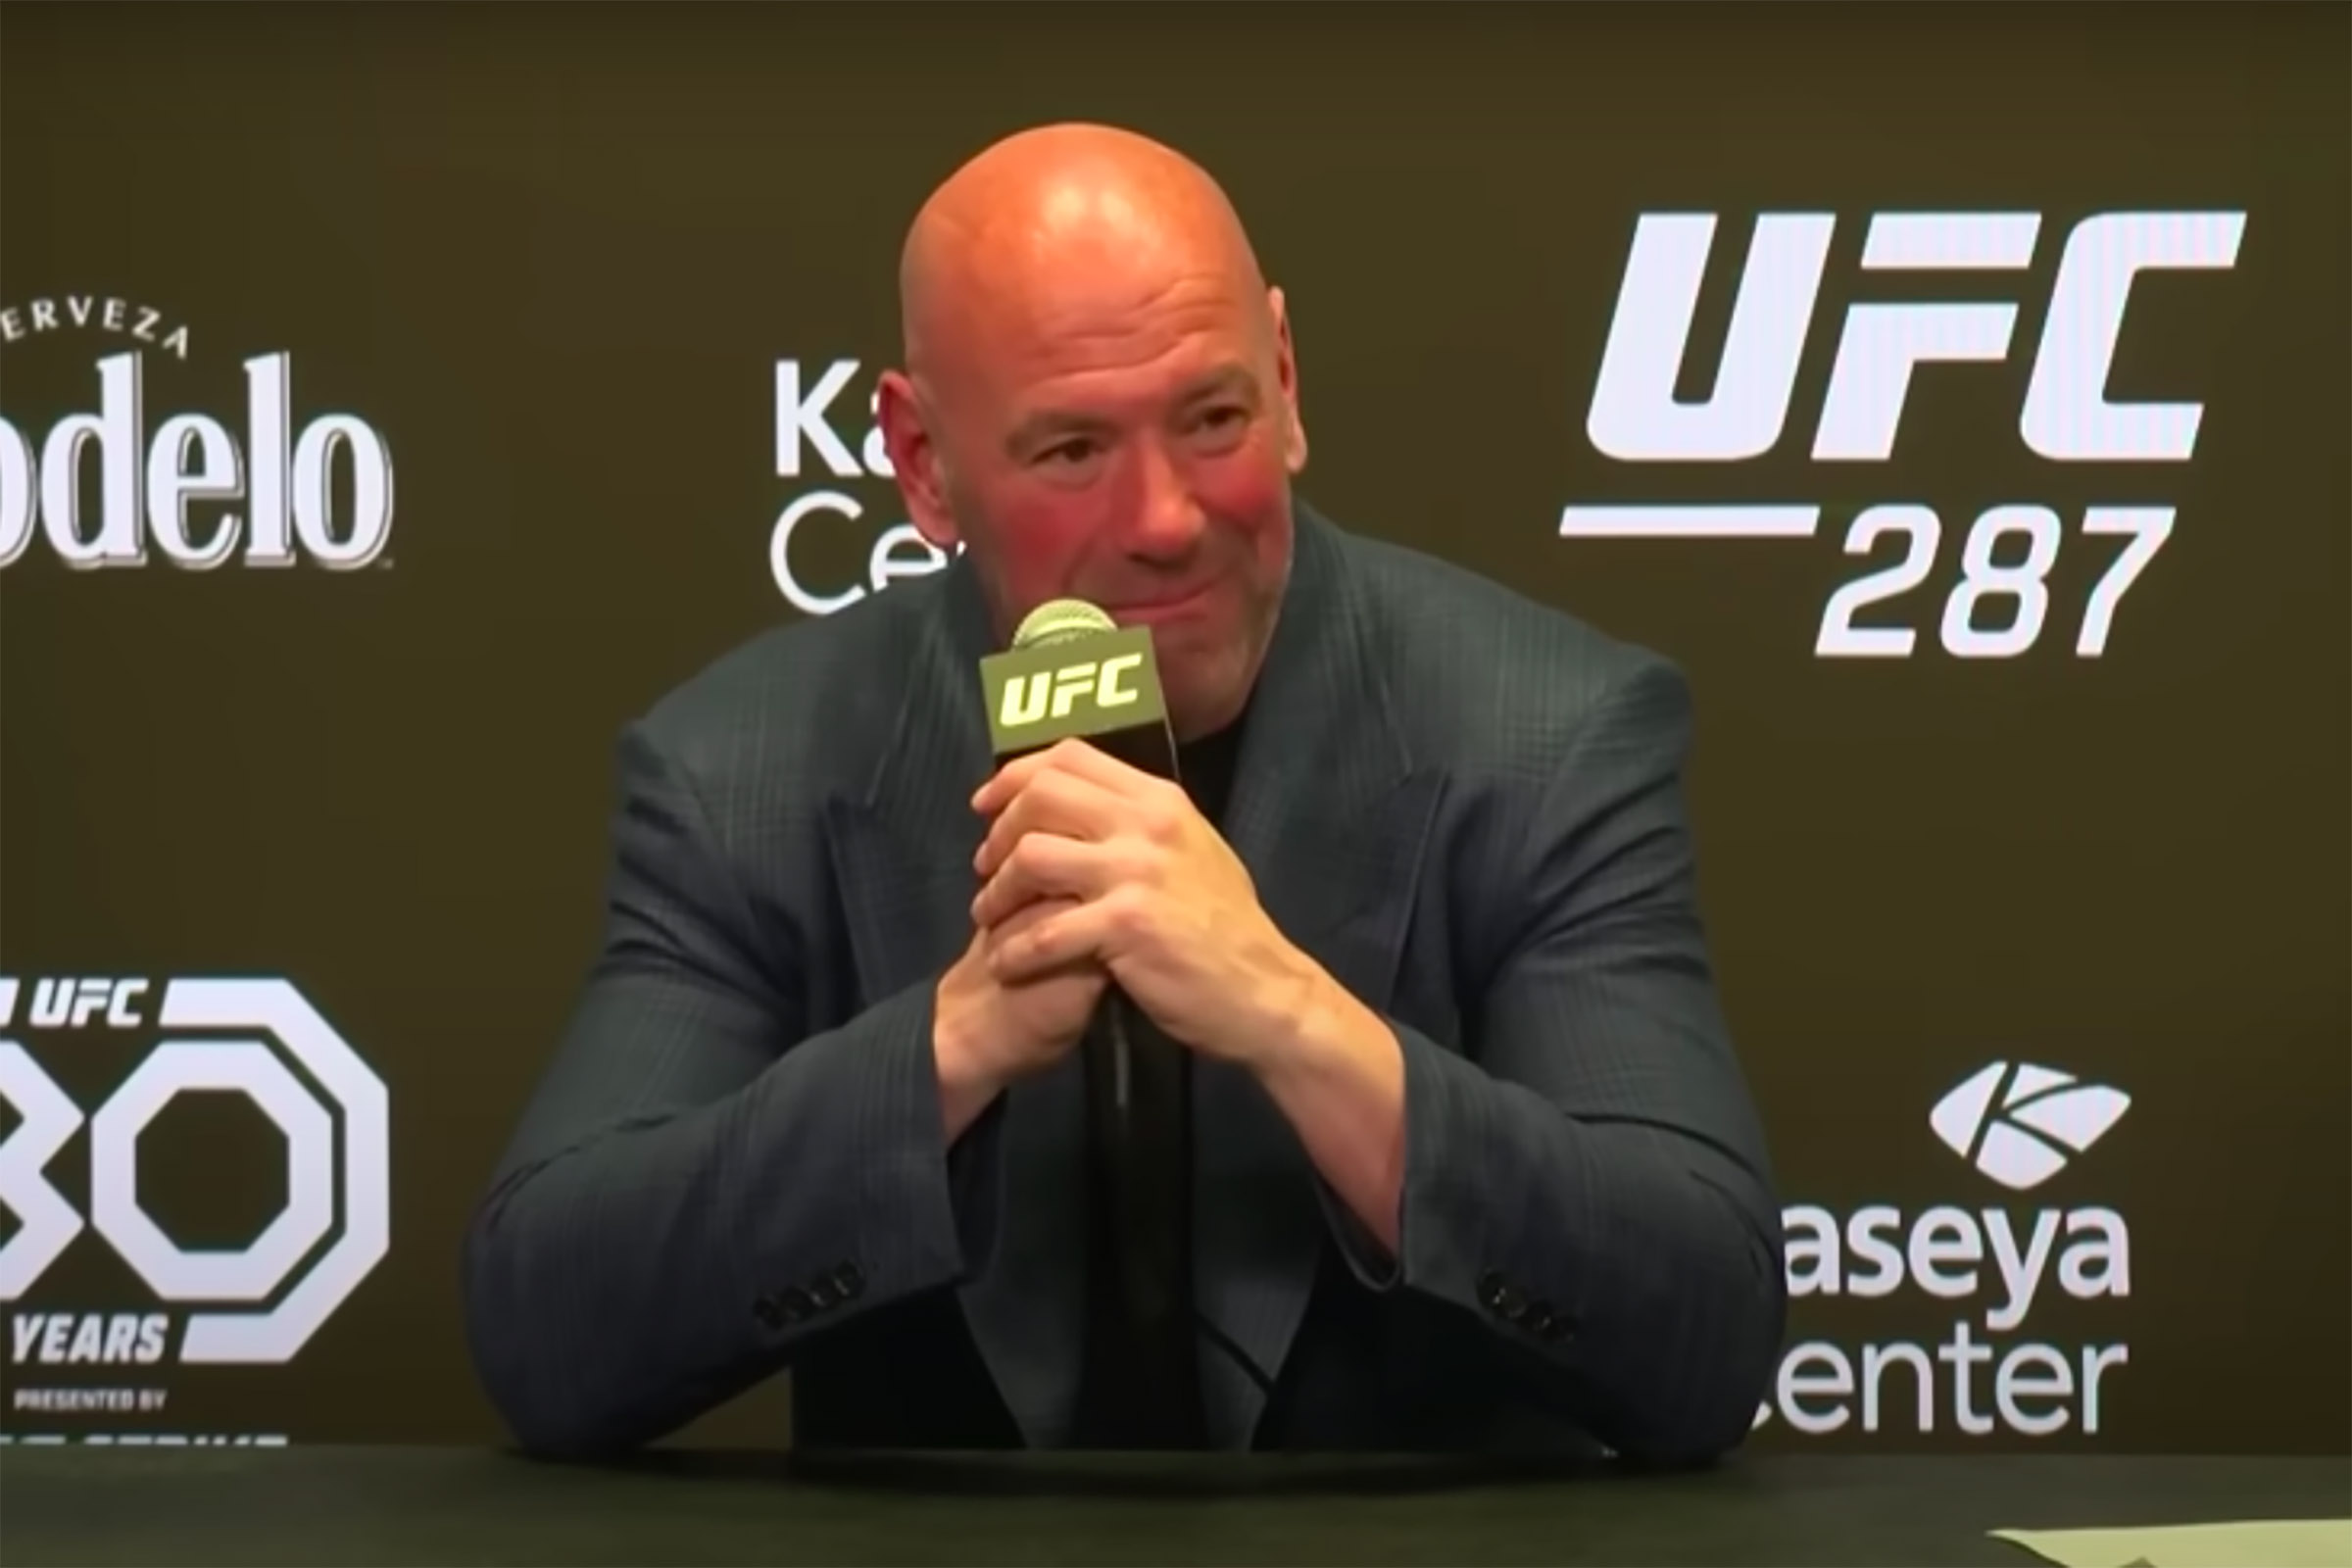 Dana White: Miami Delivers K.O. To Madison Square Garden With UFC 287